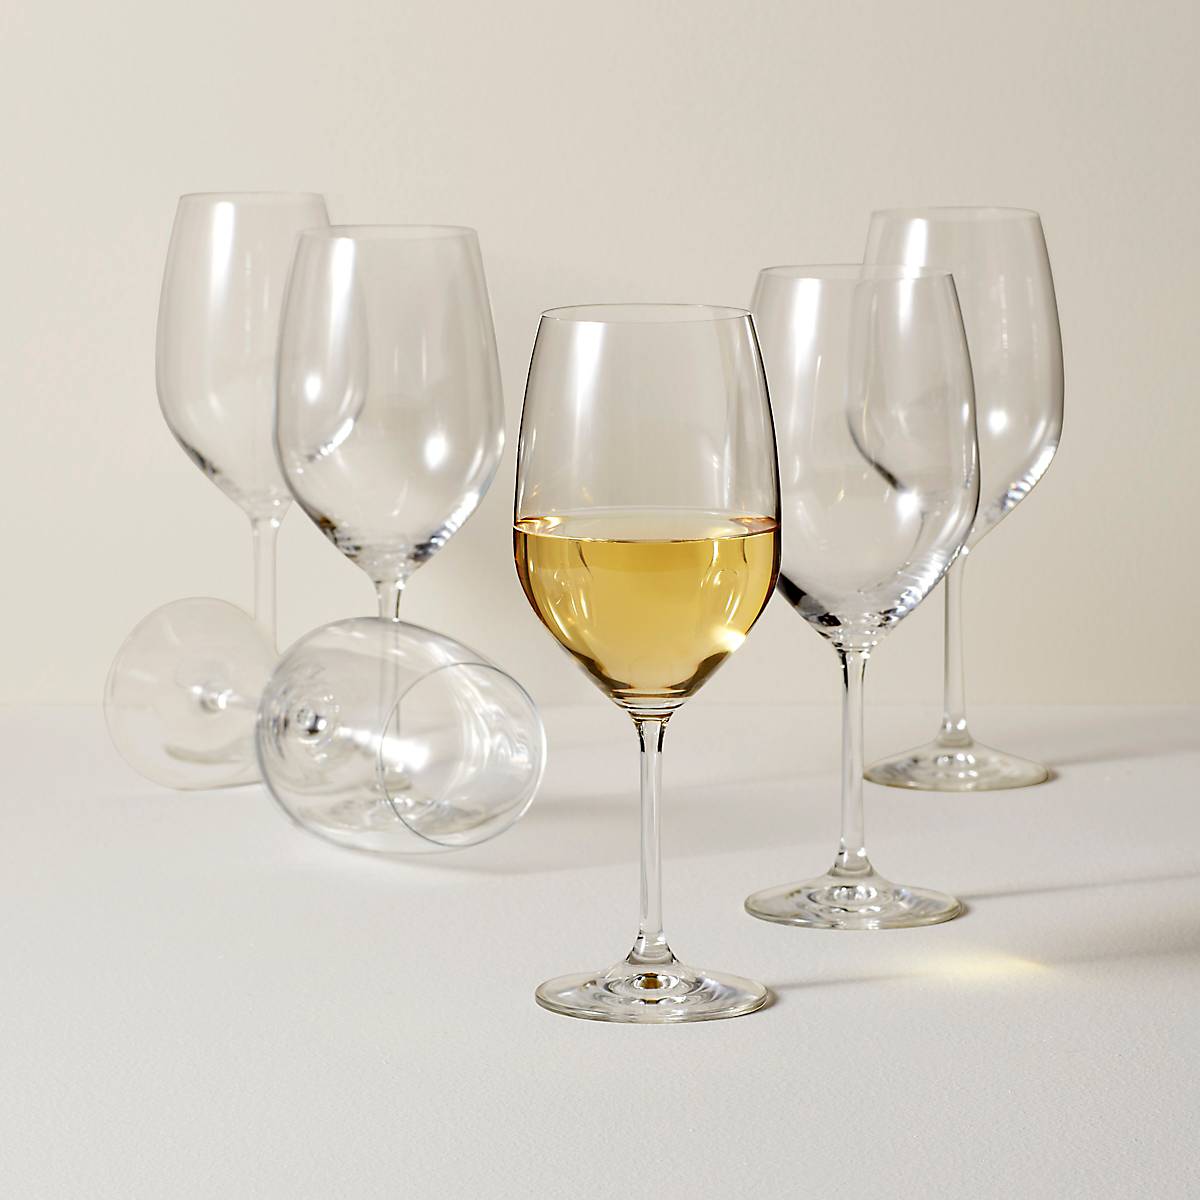 Monogrammed 19 oz. Classic Wine Glass Set of 4